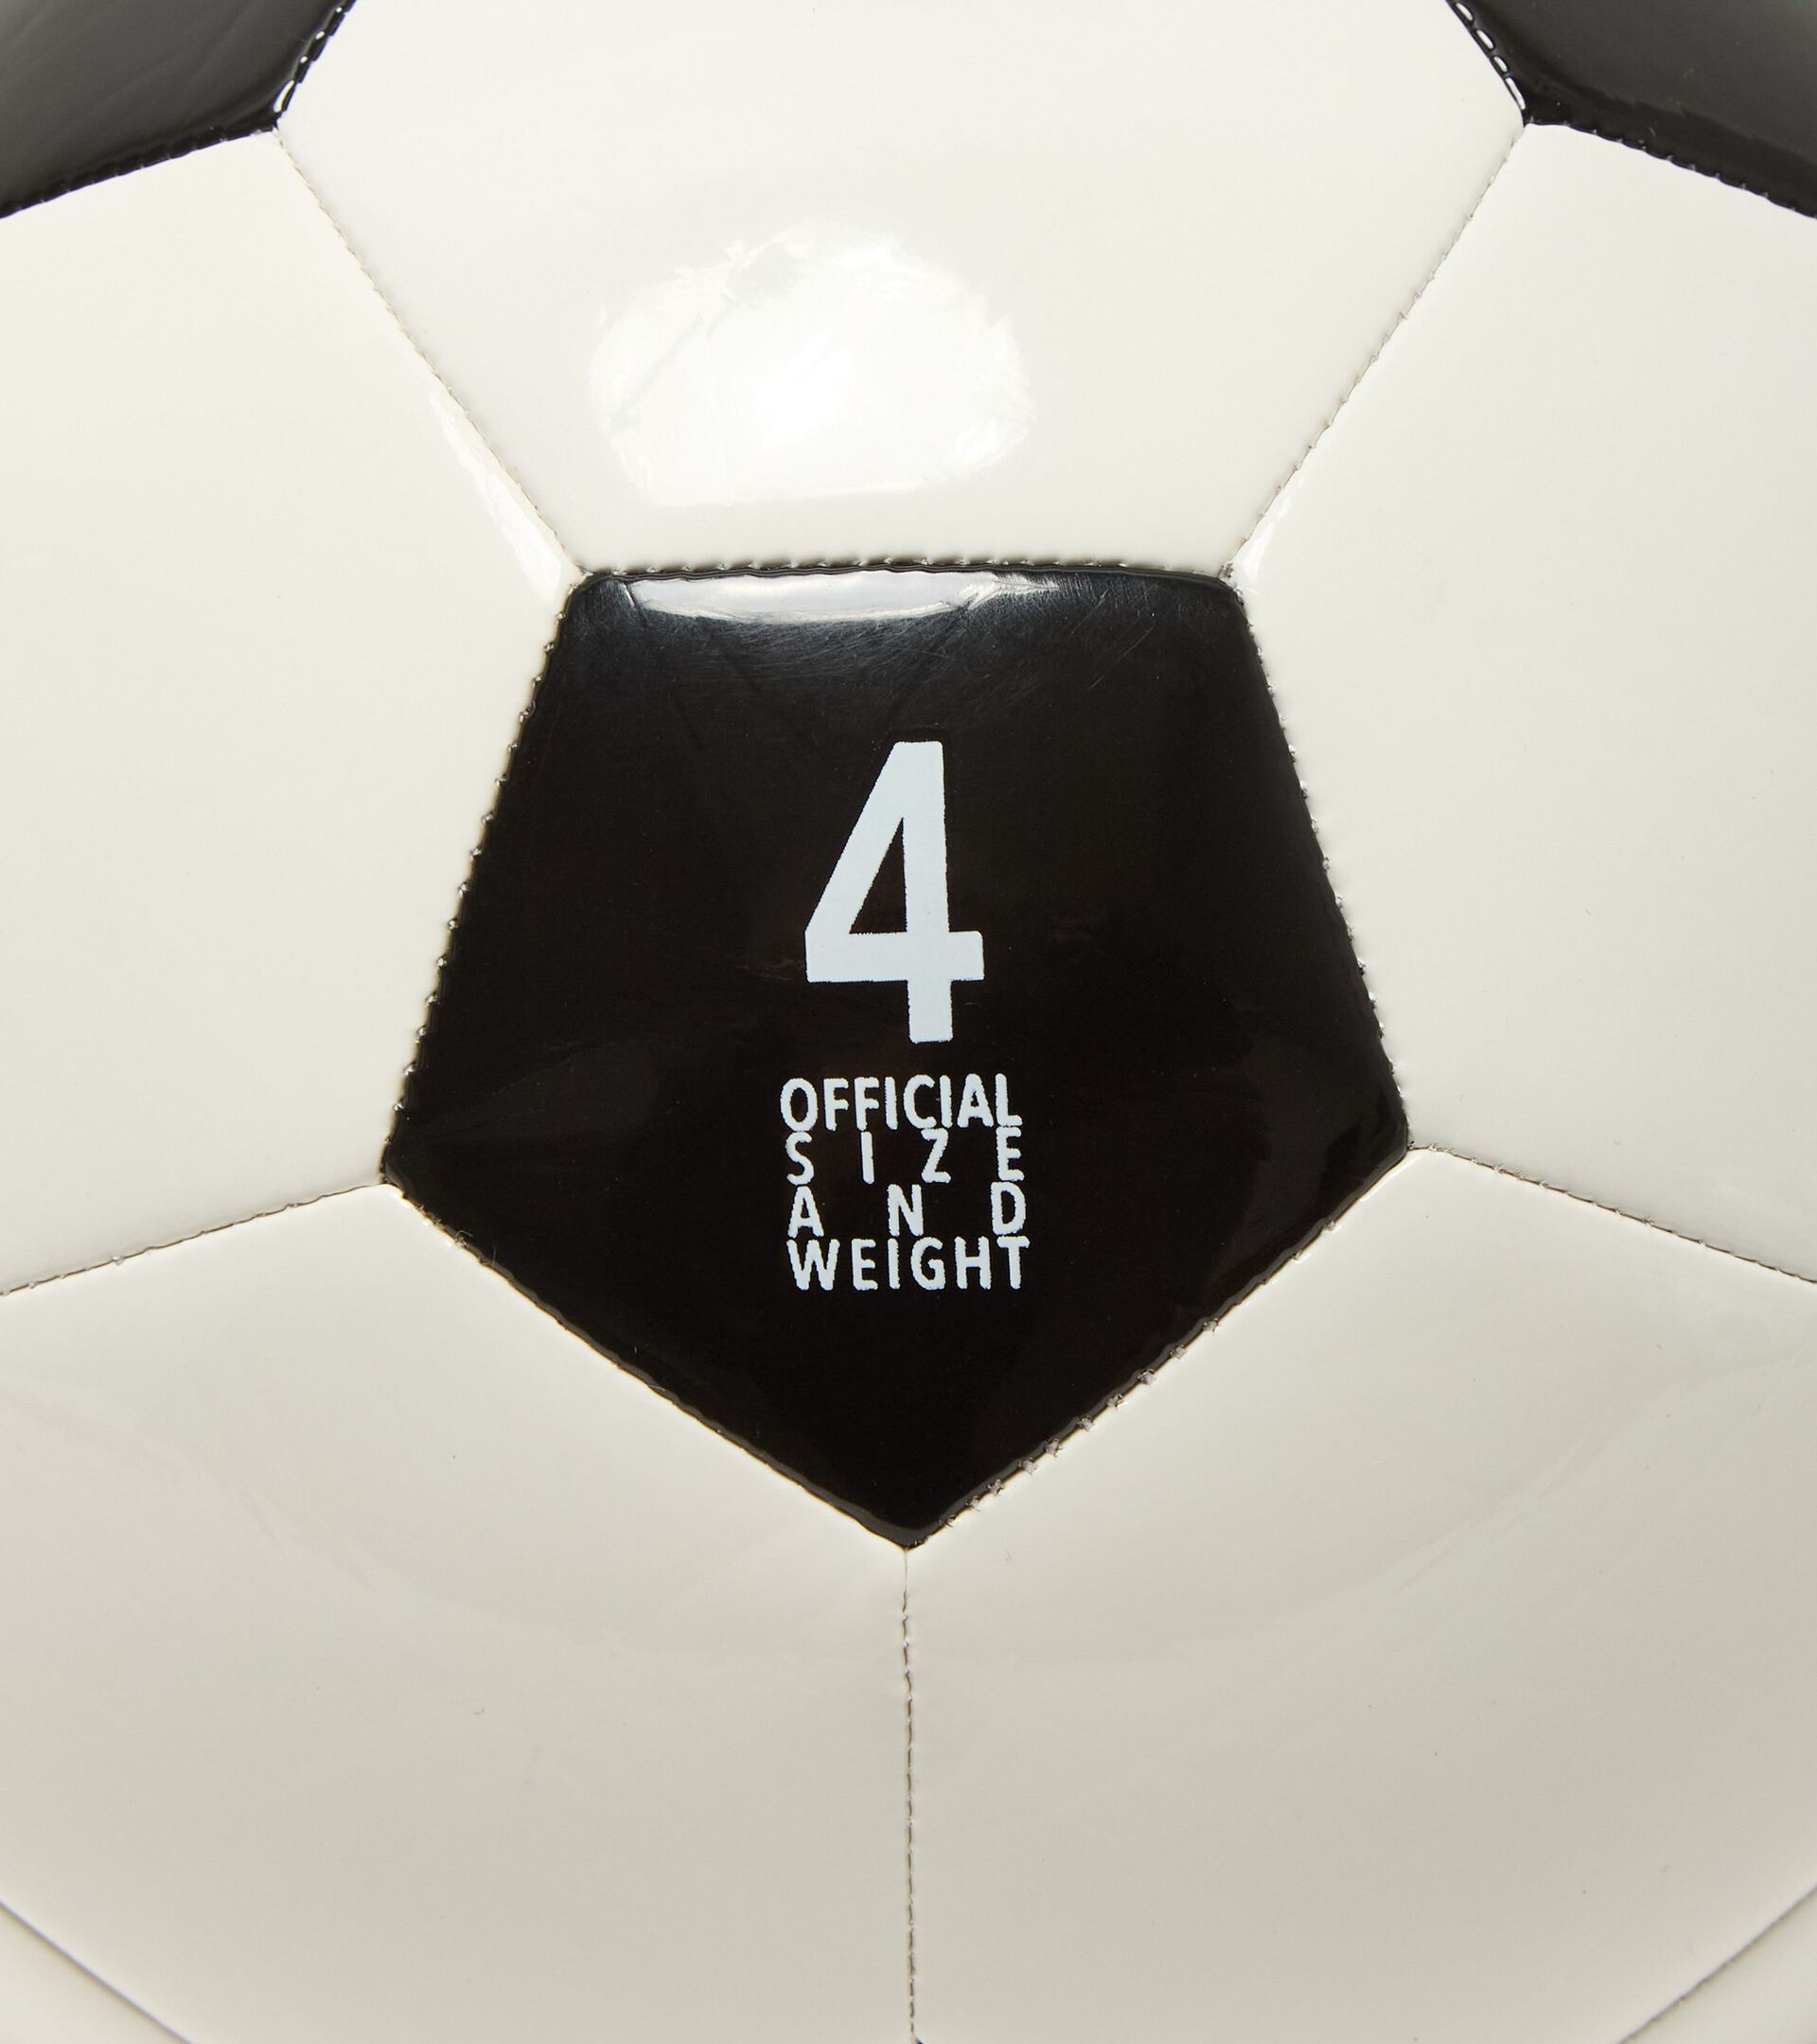 Soccer ball - size 4 SQUADRA 4 OPTICAL WHITE/BLACK - Diadora